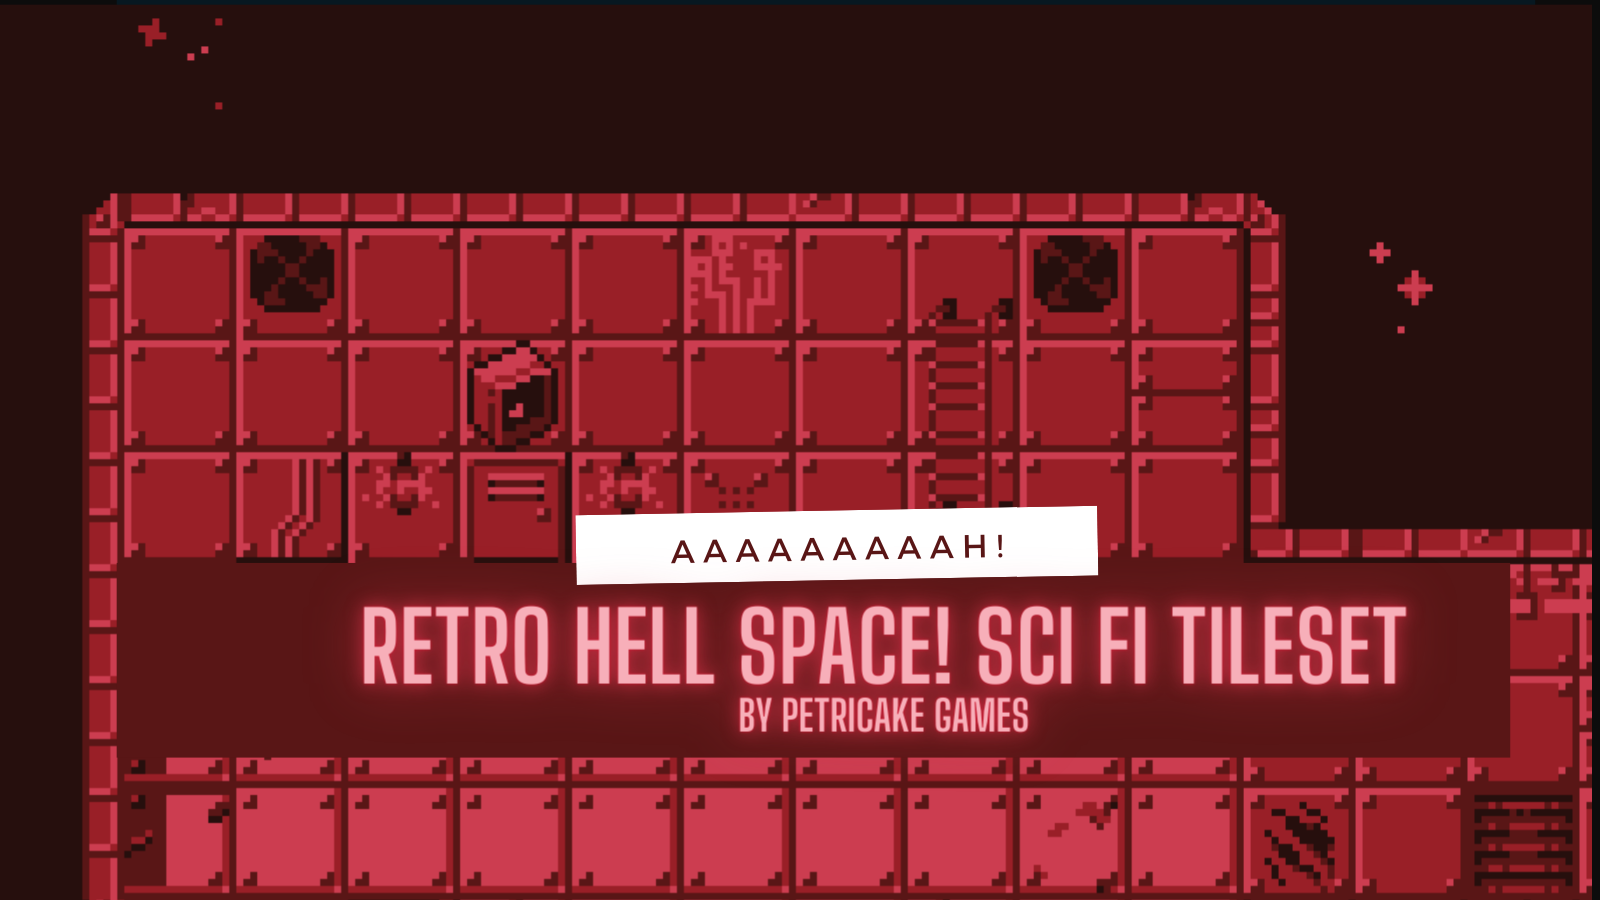 Retro Hell Space! Sci-Fi Tileset